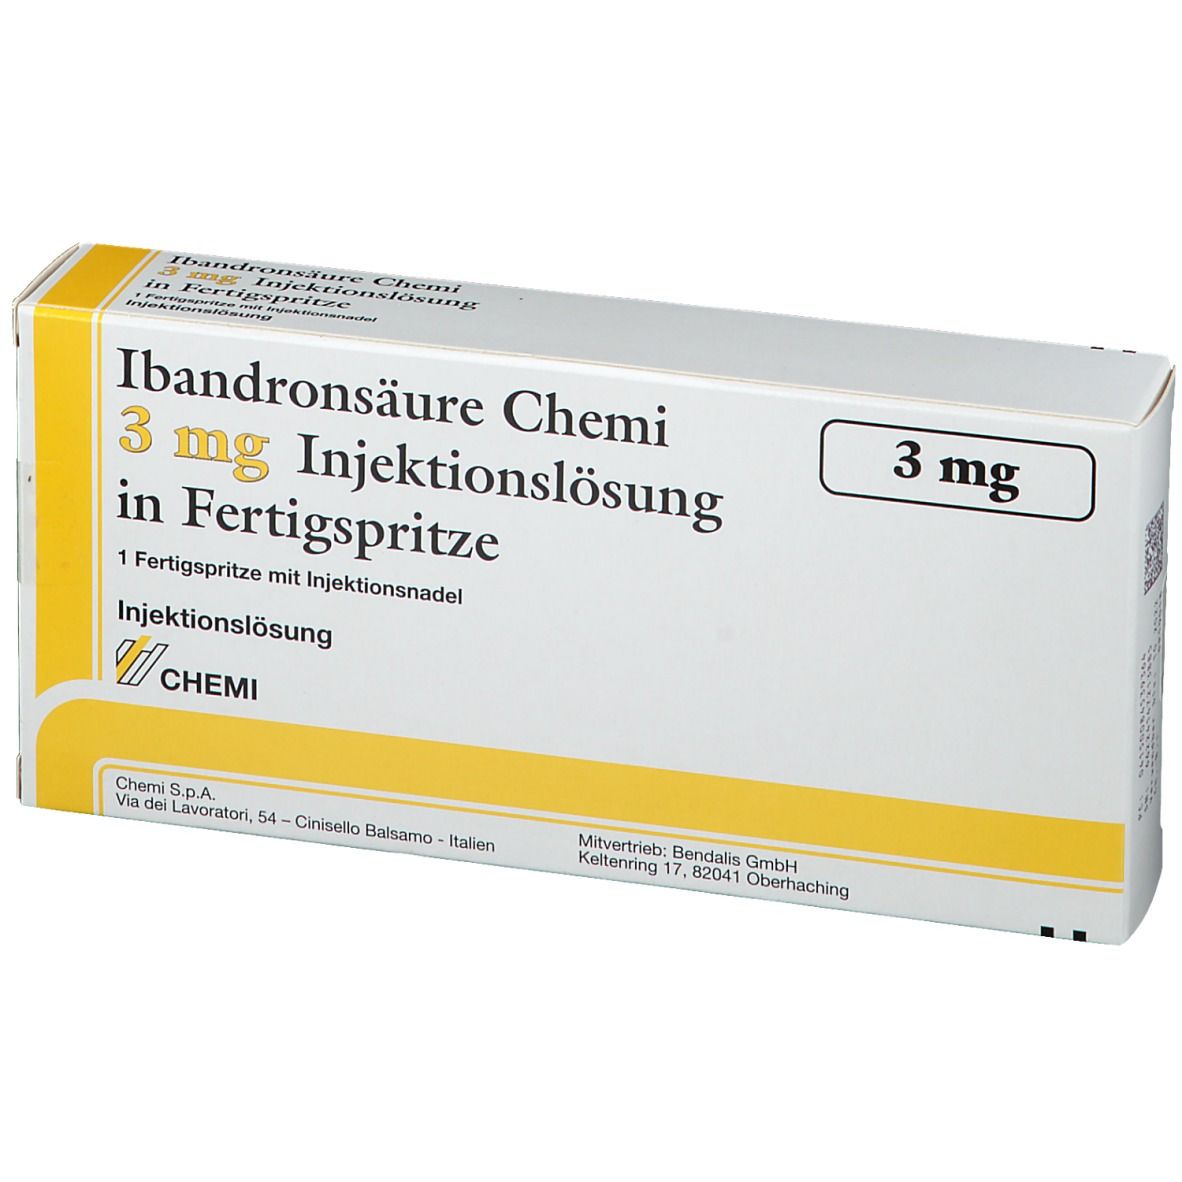 Ibrandronsäure Chemi 3 mg